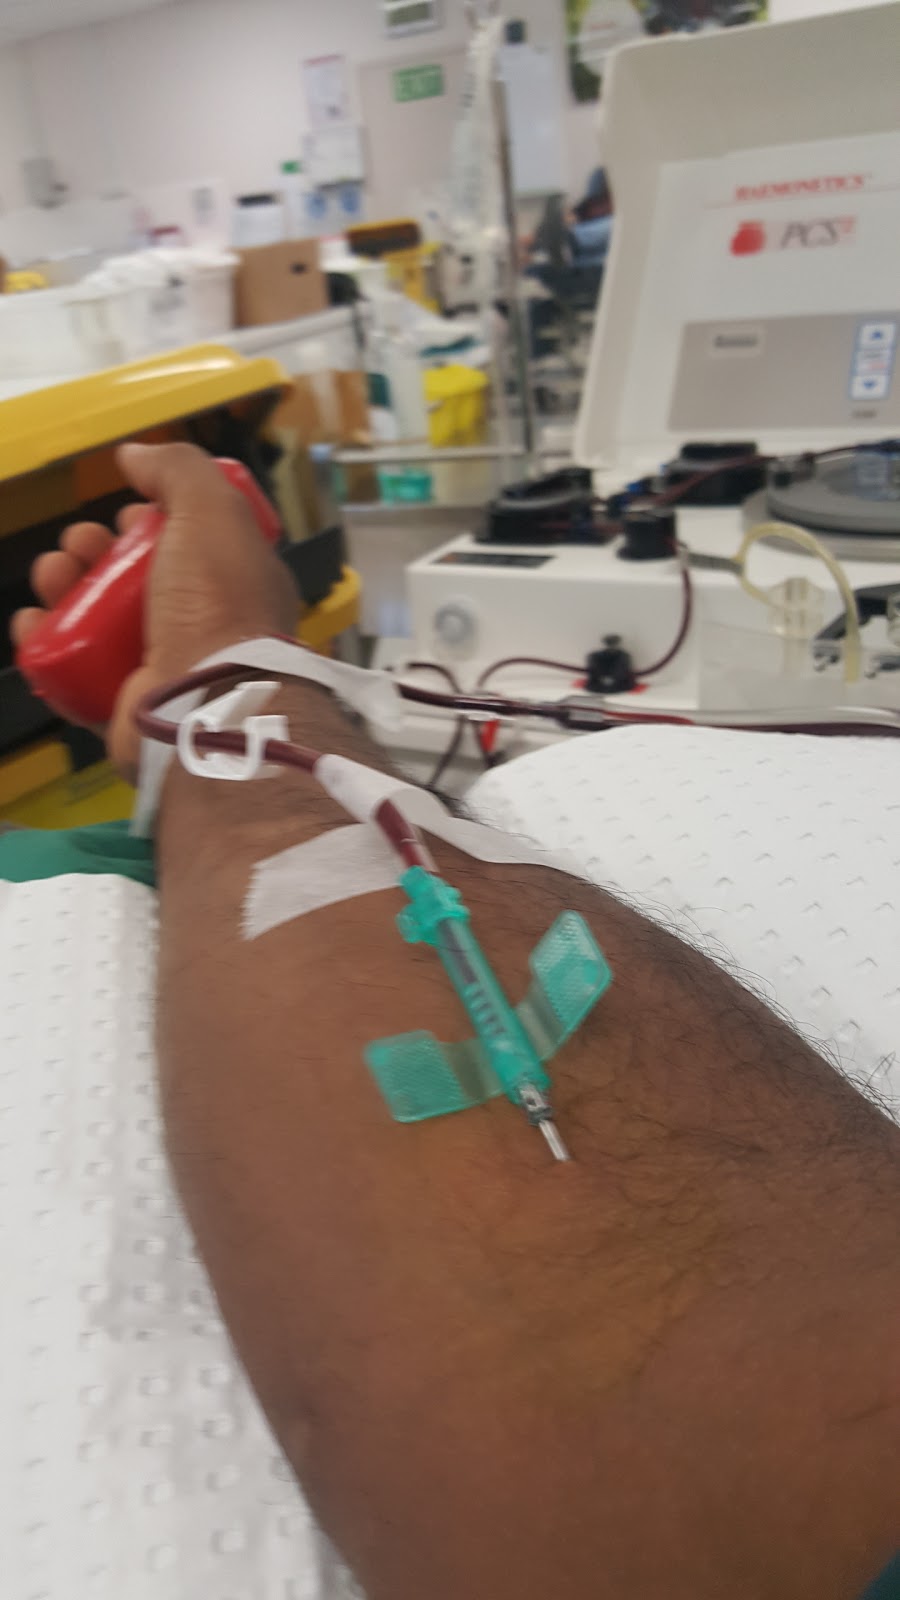 Australian Red Cross Blood Service Cannington Donor Centre | 8/1296 Albany Hwy, Cannington WA 6107, Australia | Phone: 13 14 95